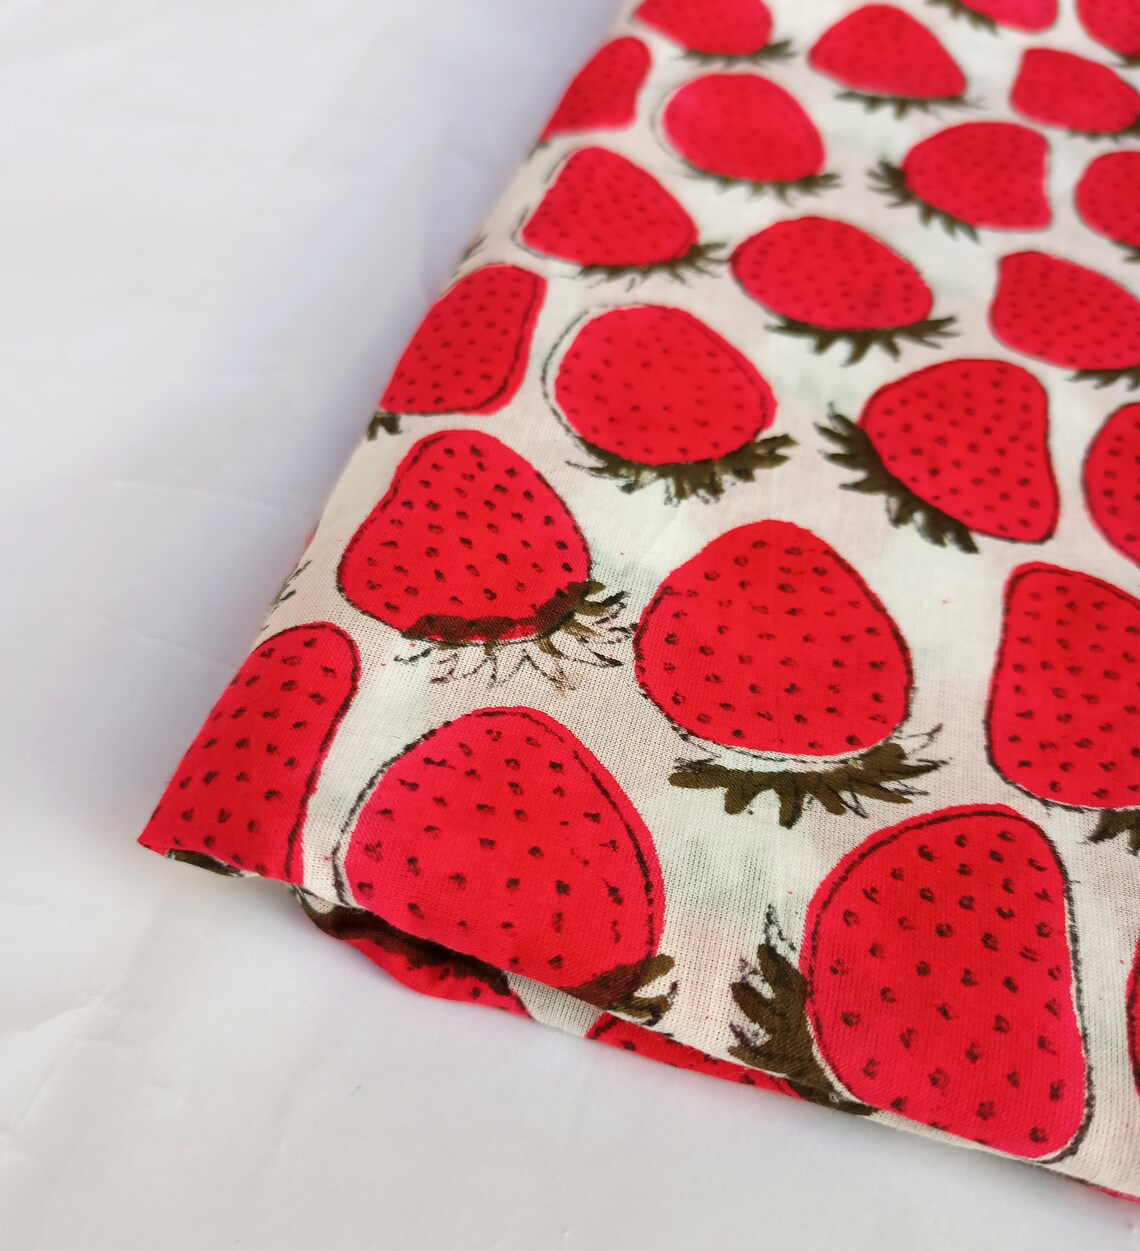 Strawberry Print Fabric by the Yard Block Print Cotton - Etsy